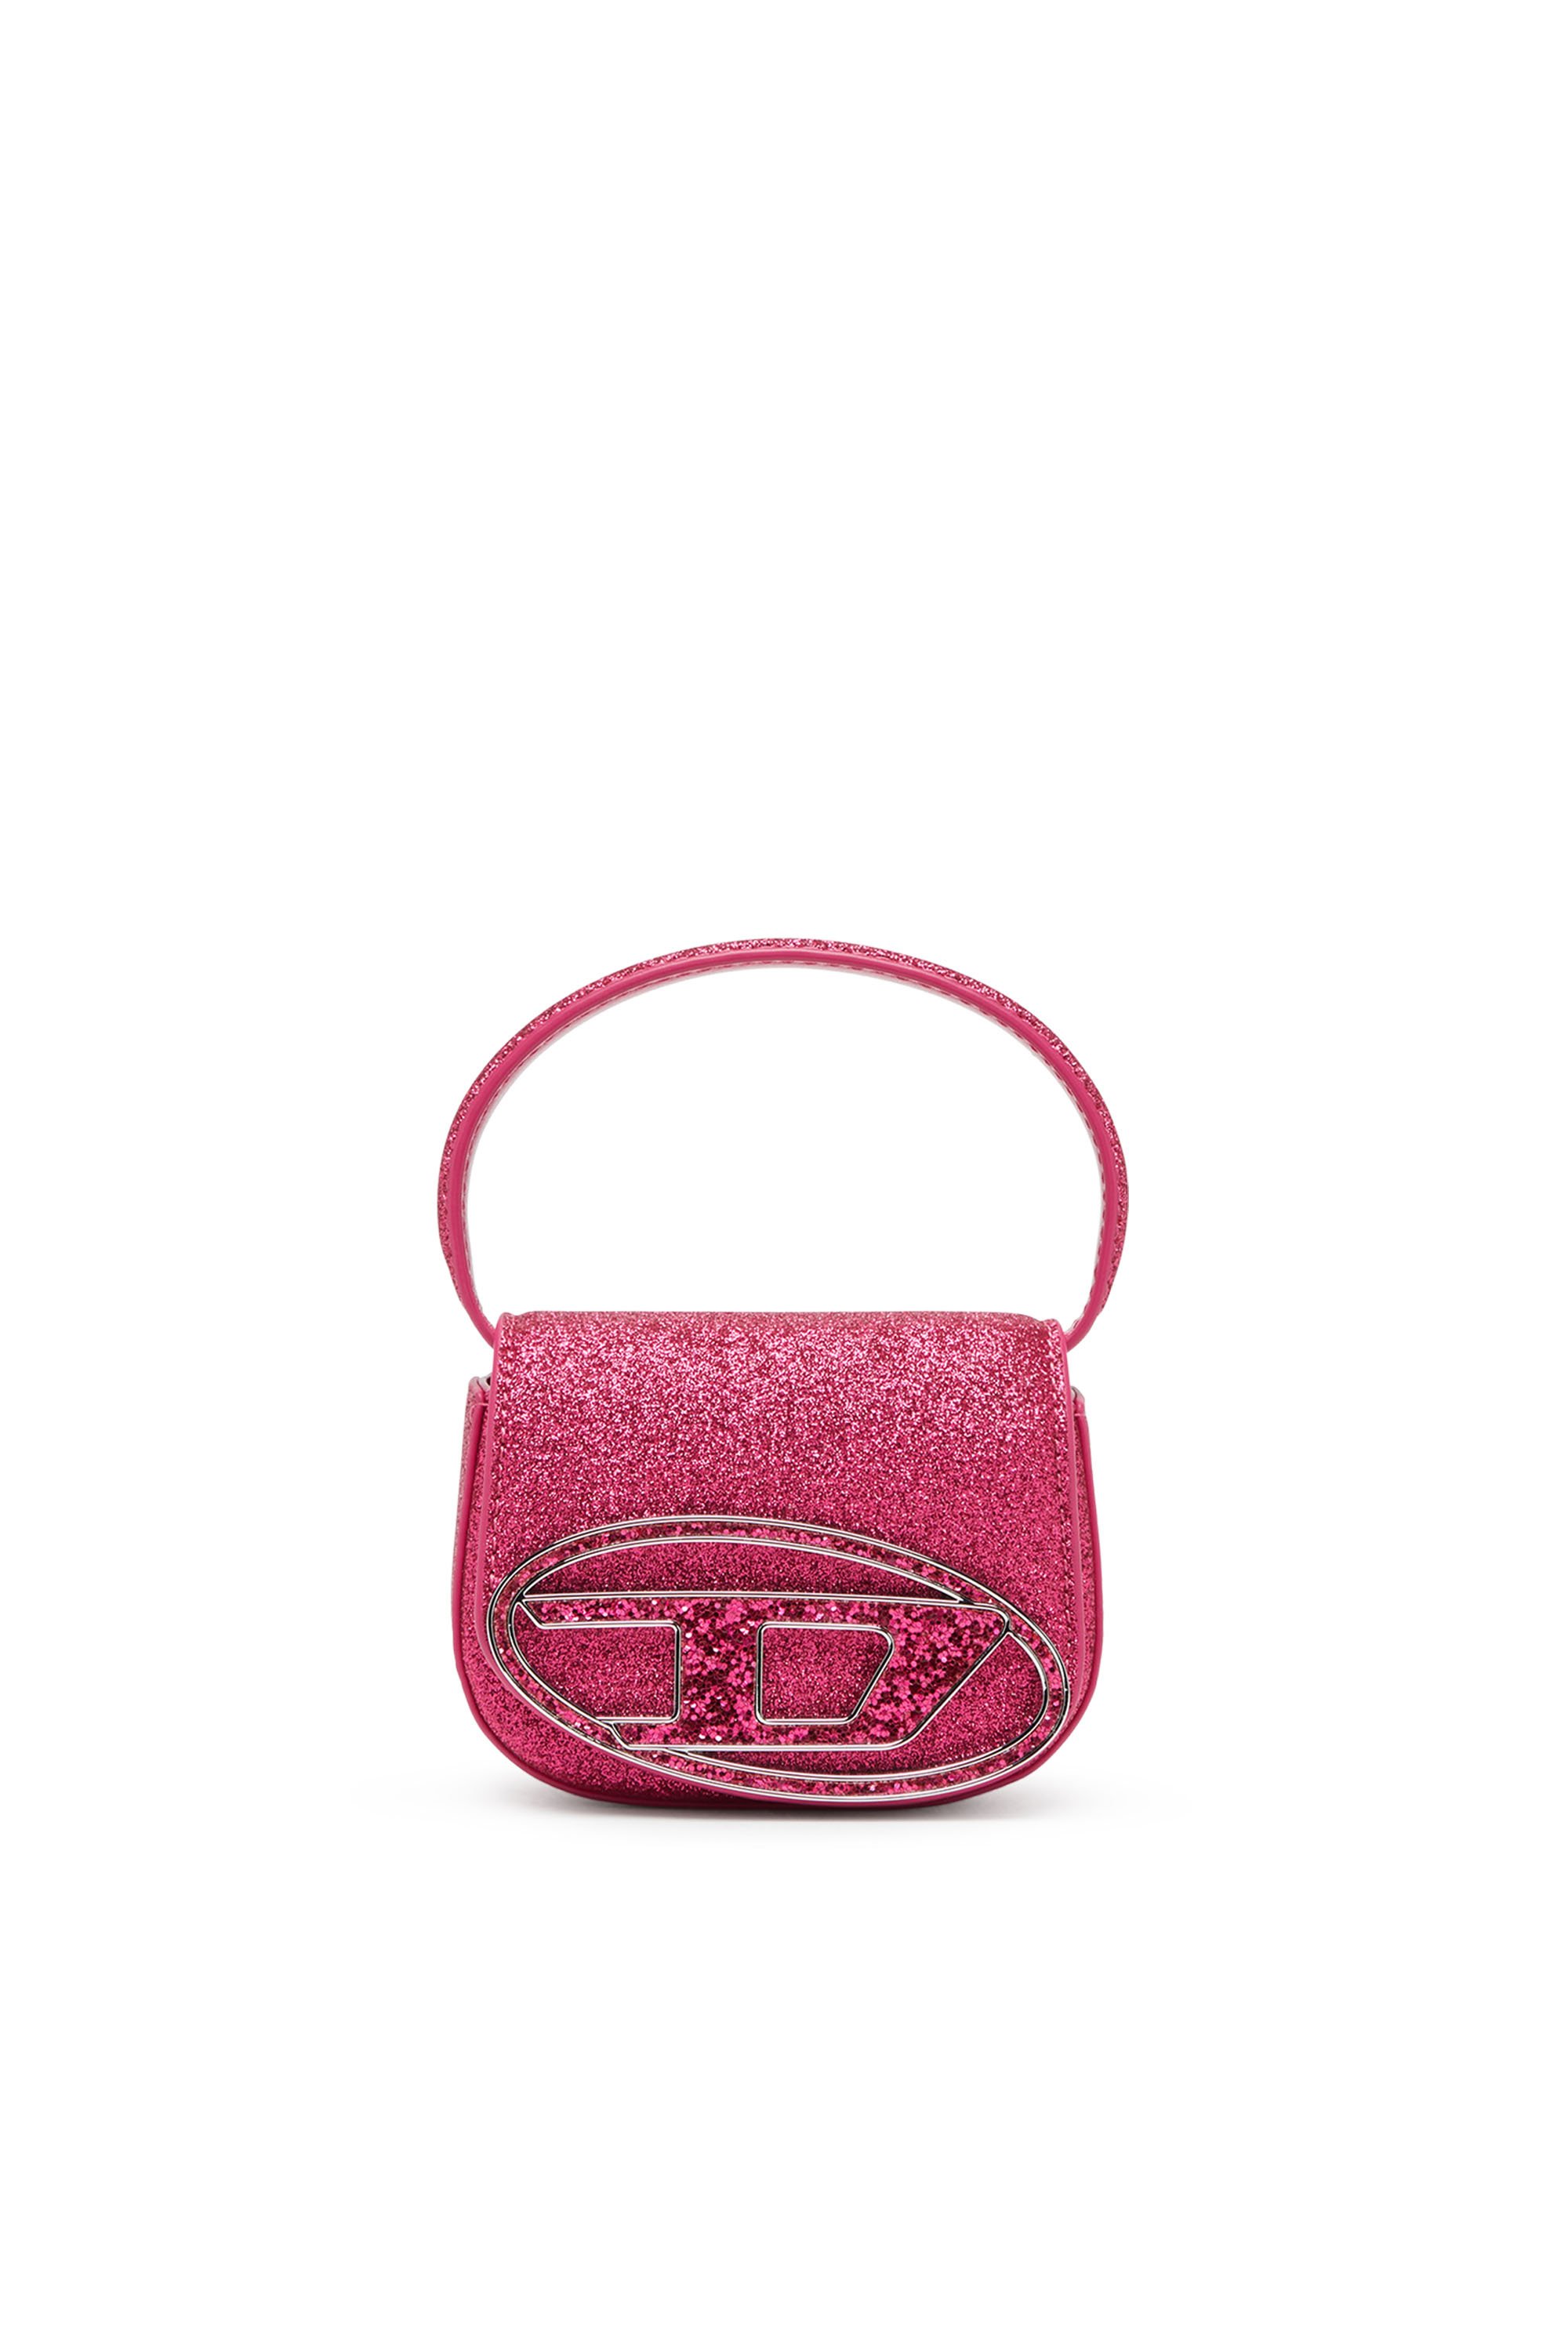 Diesel - 1DR XS Cross Bodybag - Iconic mini bag in glitter fabric - Crossbody Bags - Woman - Pink